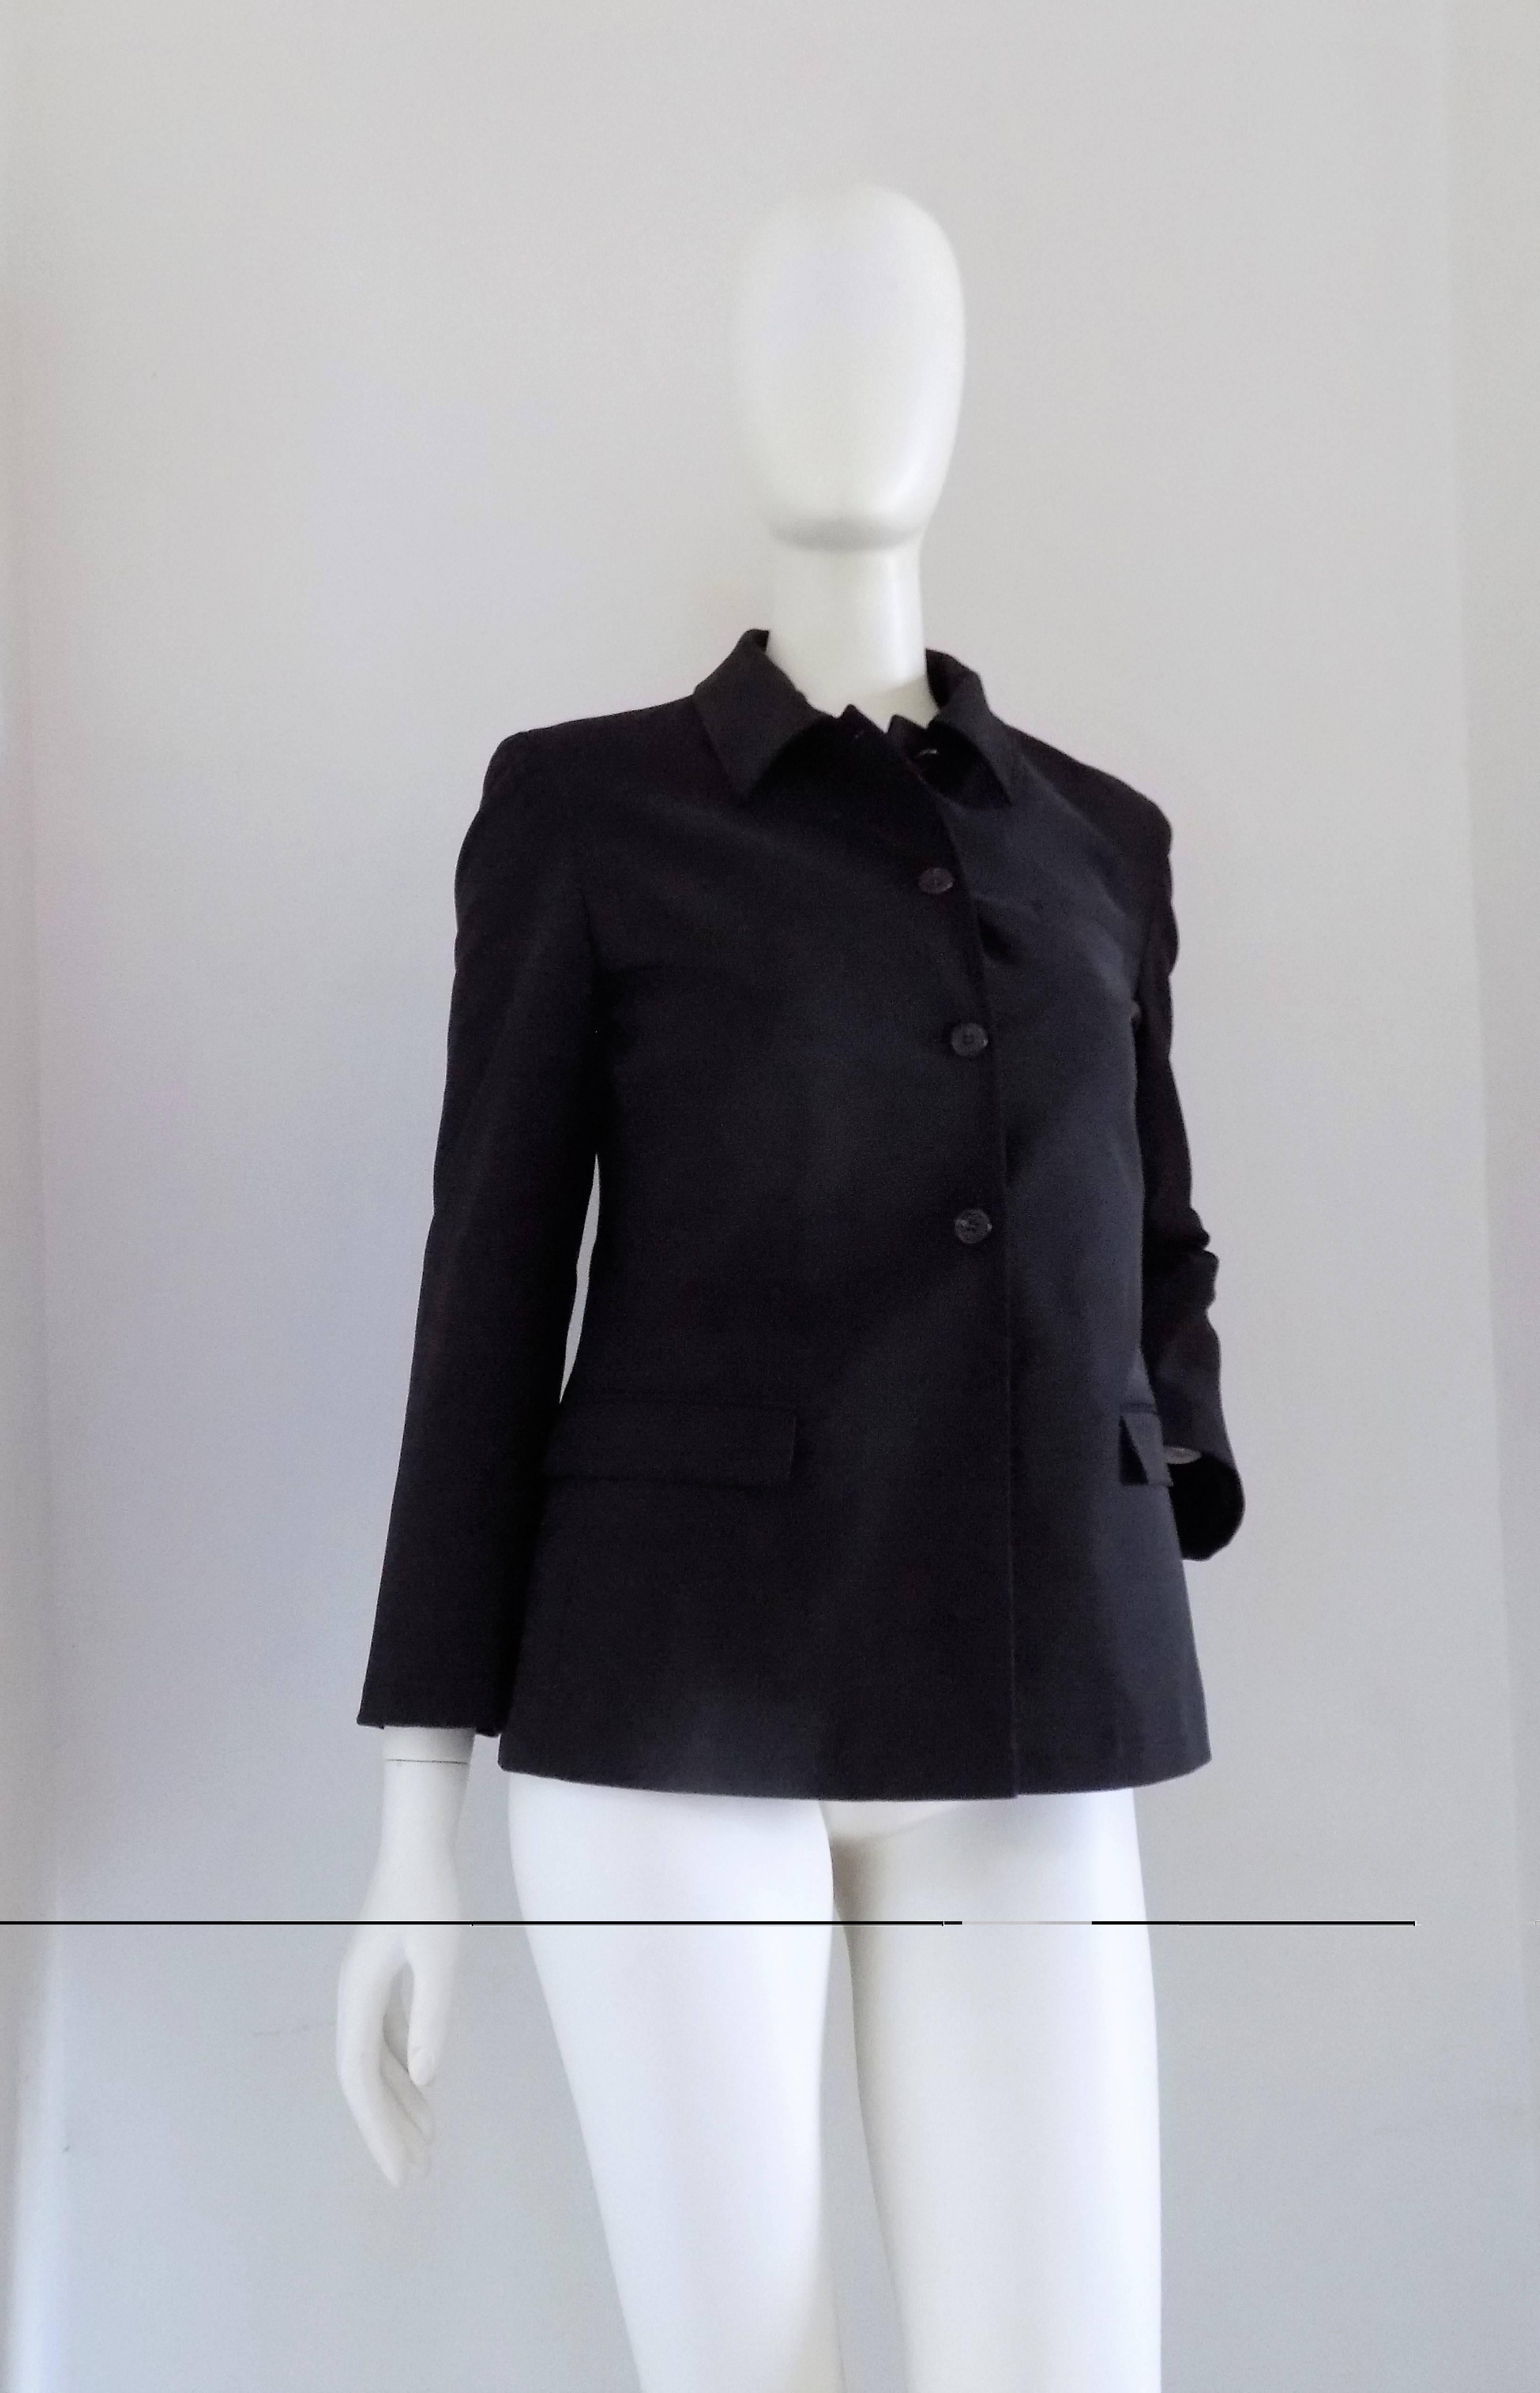 Prada Black Jacket In Excellent Condition For Sale In Capri, IT